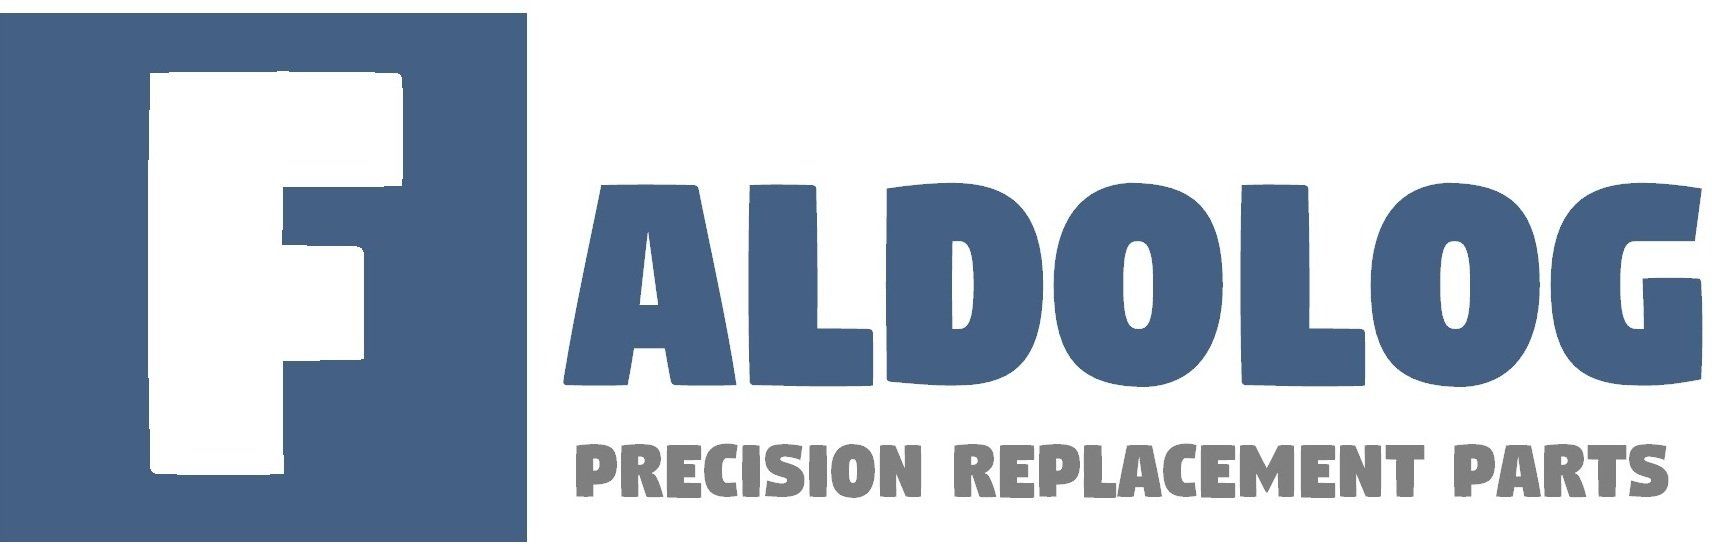 Faldolog Logo